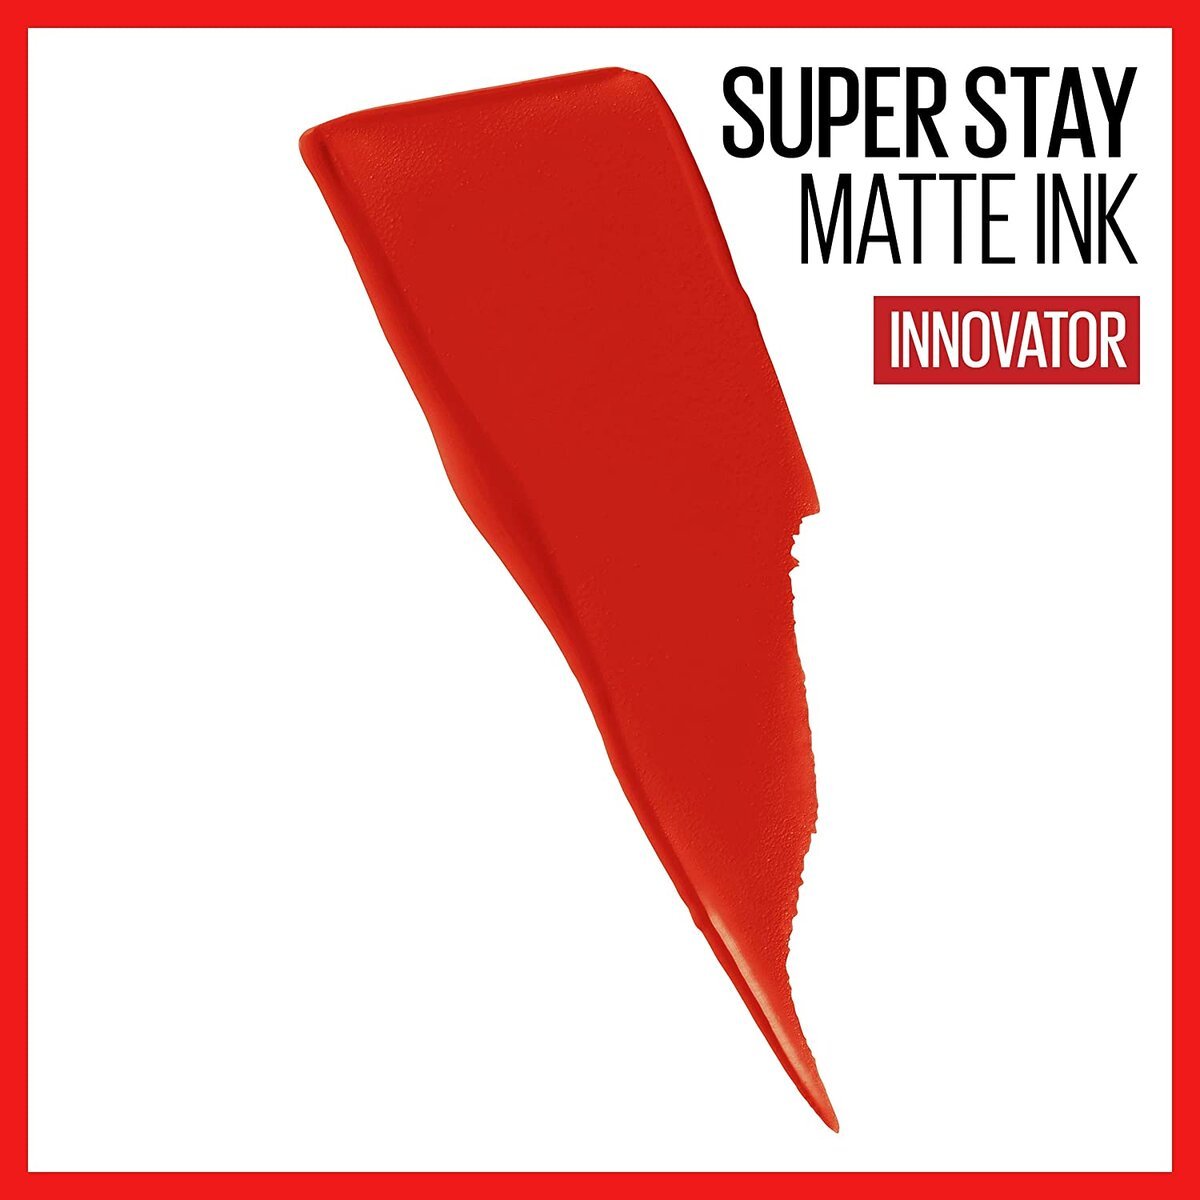 SUPERSTAY MATTE INK SPICED EDITION INNOVATOR - MAYBELLINE